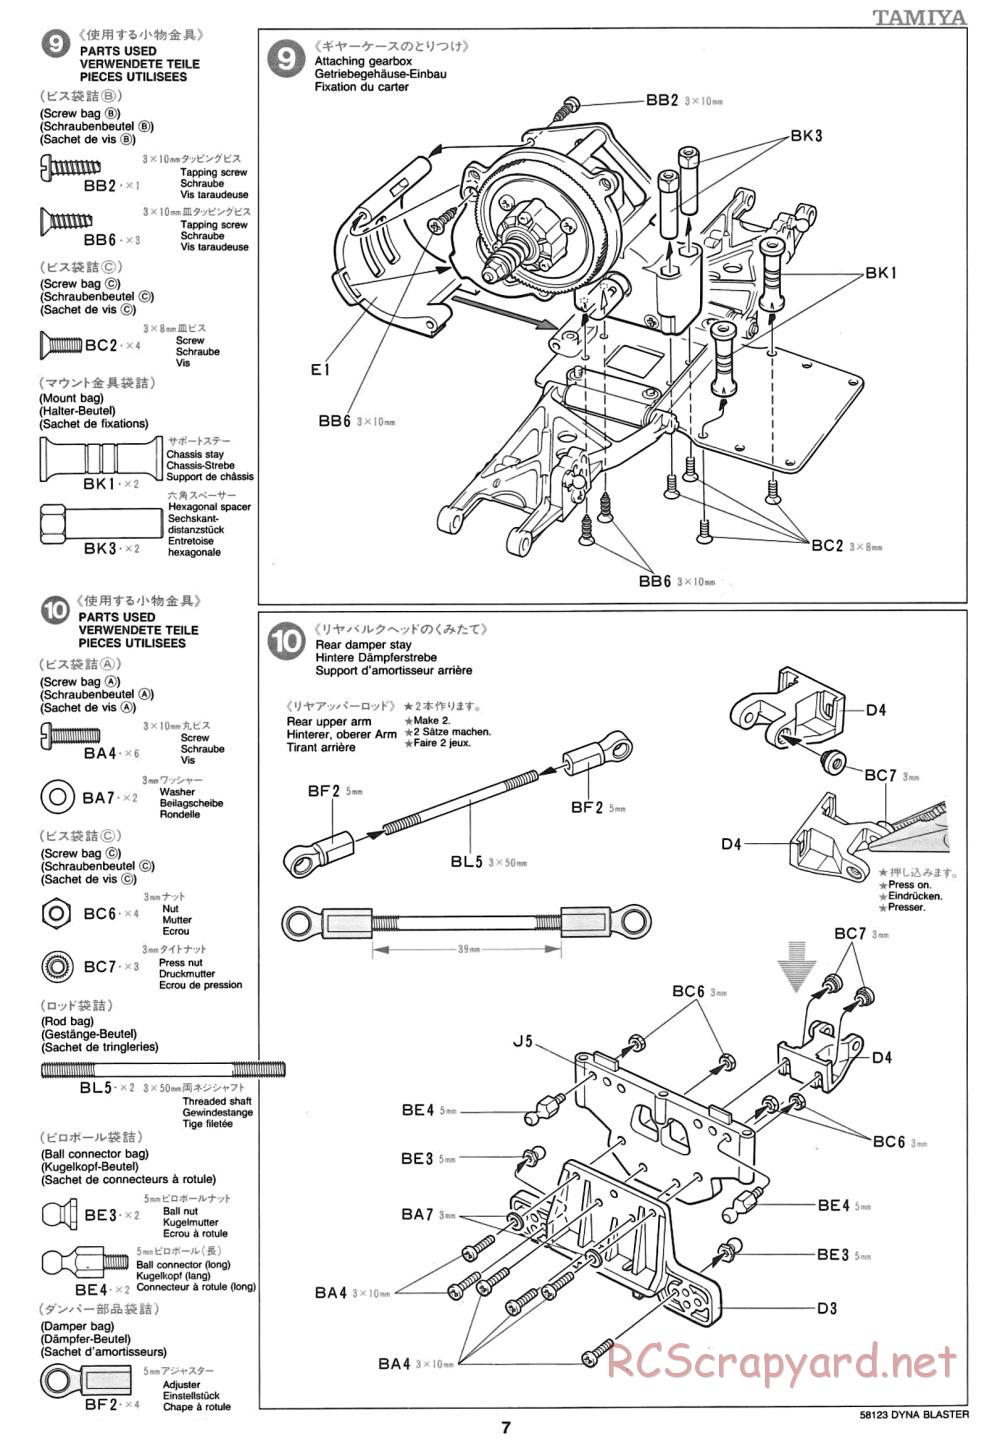 Tamiya - Dyna Blaster Chassis - Manual - Page 7